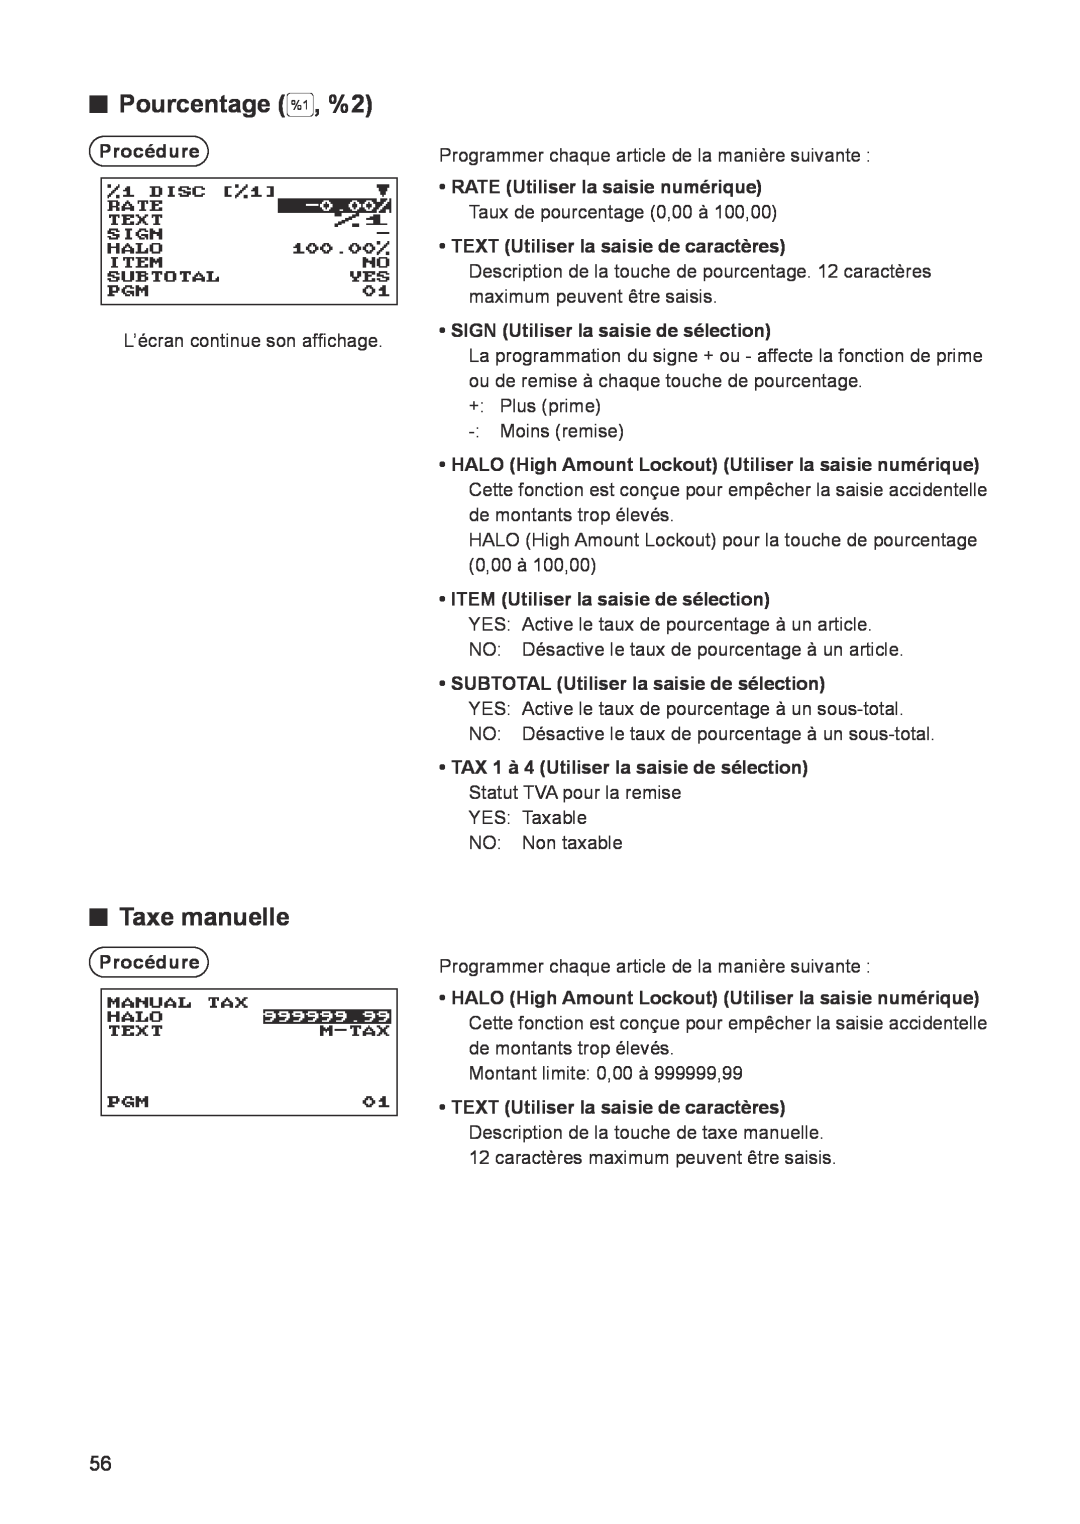 Sharp ER-A347A instruction manual Pourcentage 0, %2, Taxe manuelle 